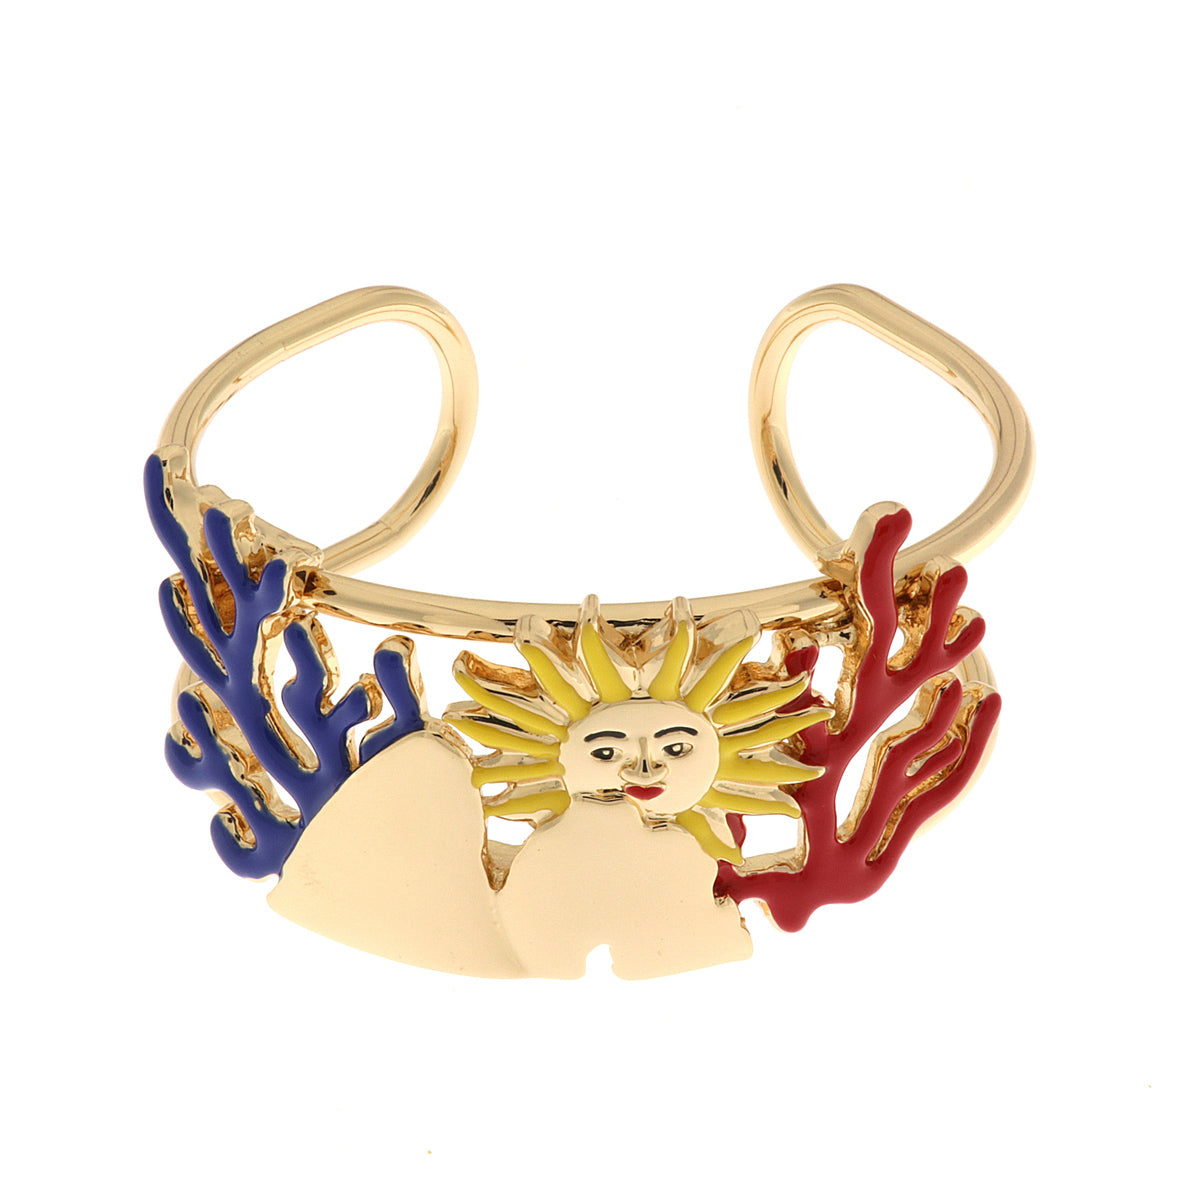 Metal bracelet with faraglioni, sun and corals